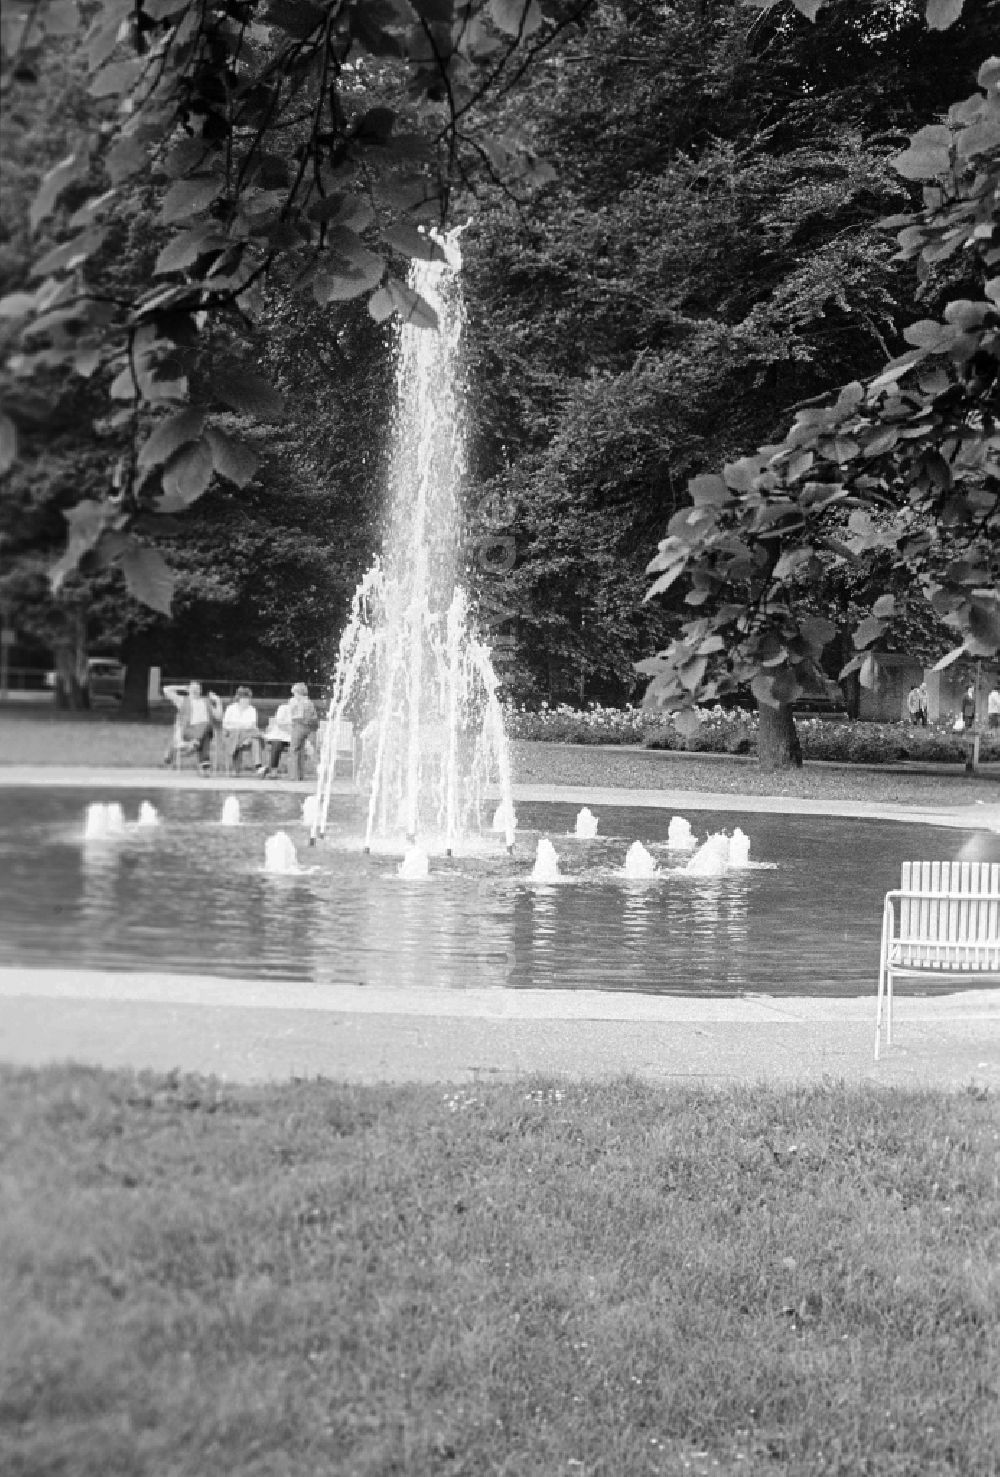 DDR-Fotoarchiv: Berlin - Springbrunnen im Rosengarten am Treptower Park in Berlin, der ehemaligen Hauptstadt der DDR, Deutsche Demokratische Republik